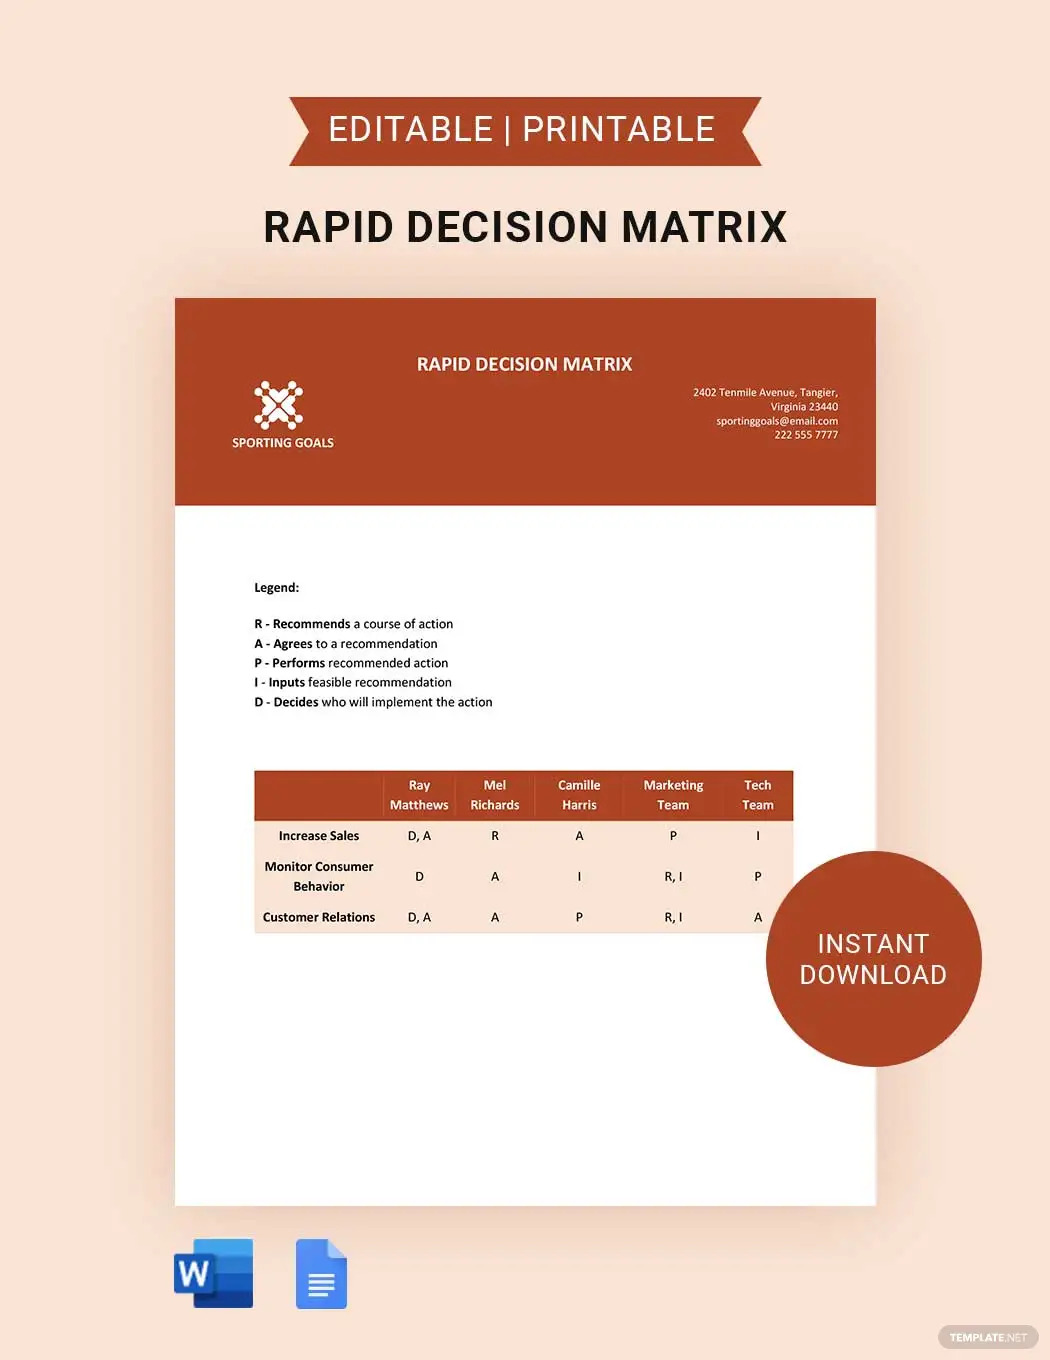 rapid decision matrix ideas and examples